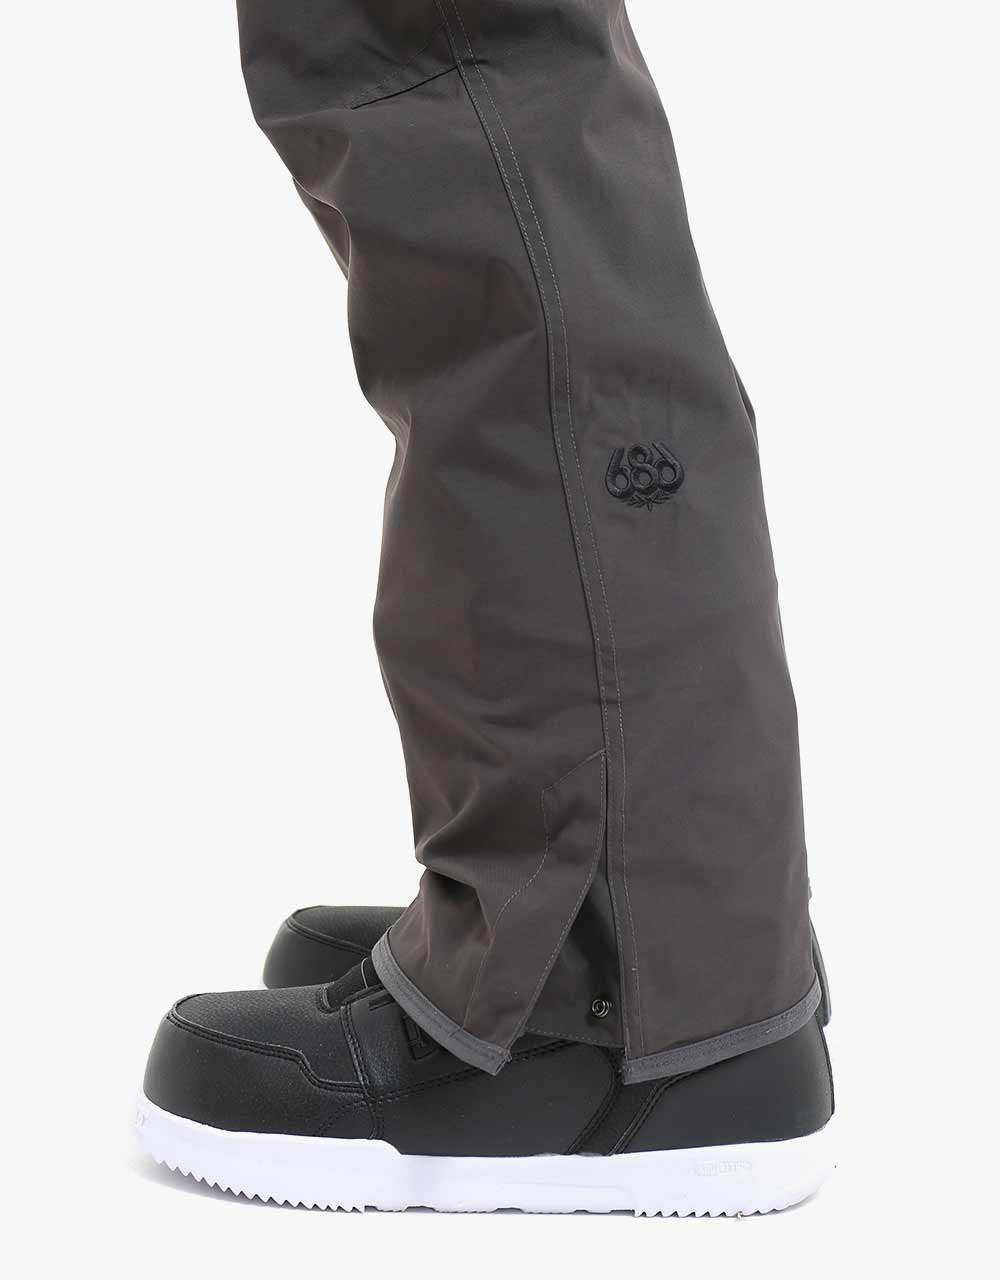 686 Standard Shell Snowboard Pants - Charcoal